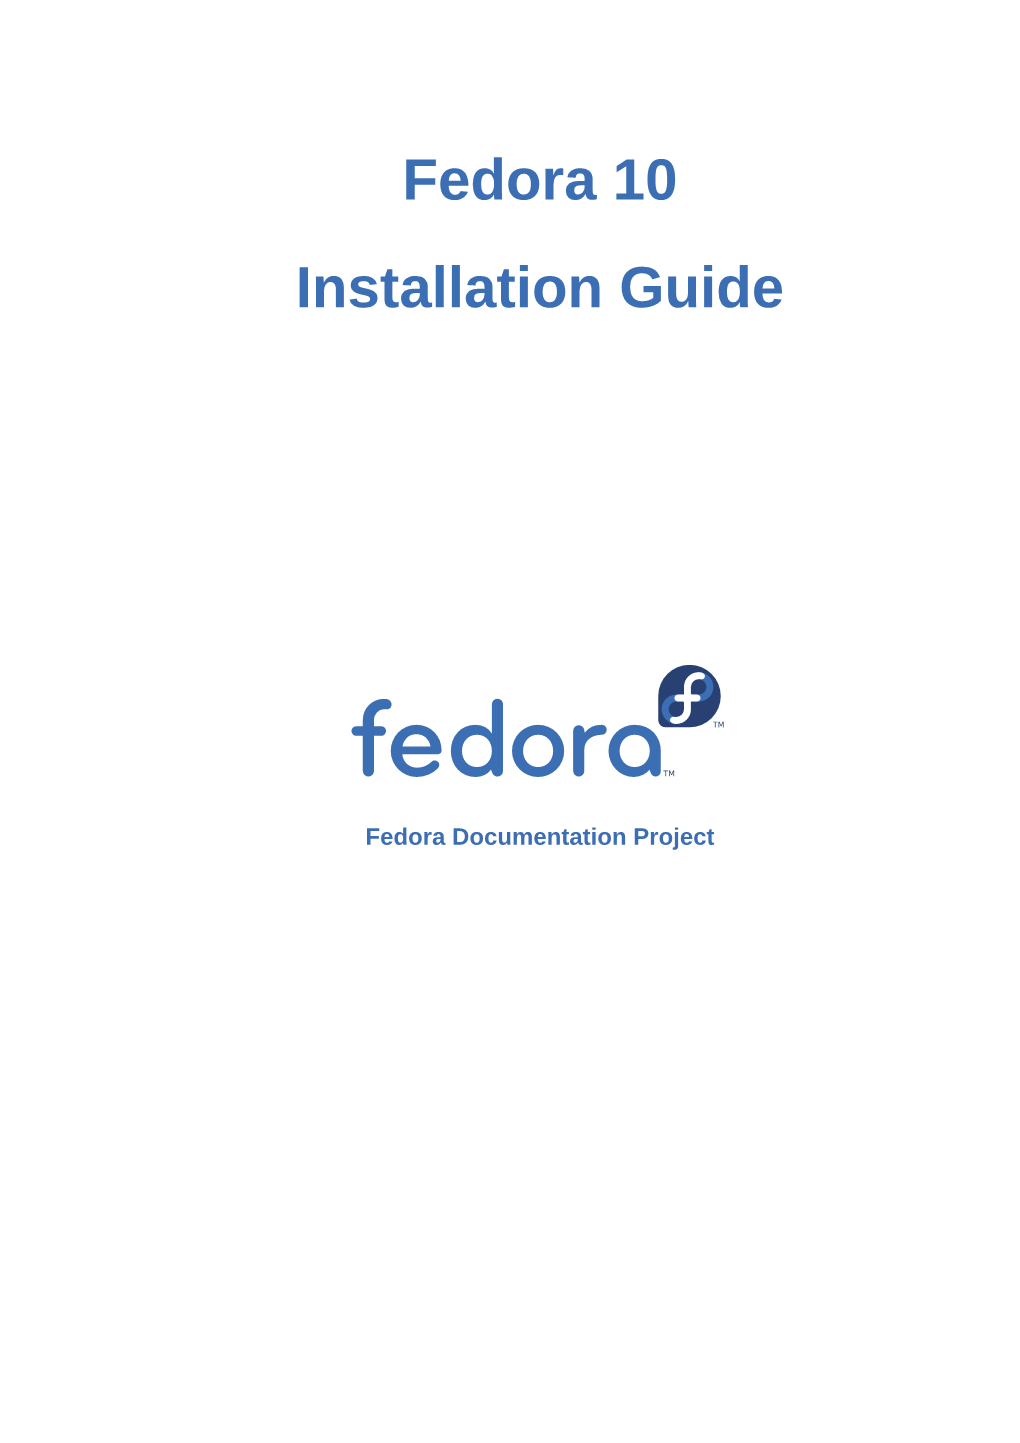 Fedora 10 Installation Guide